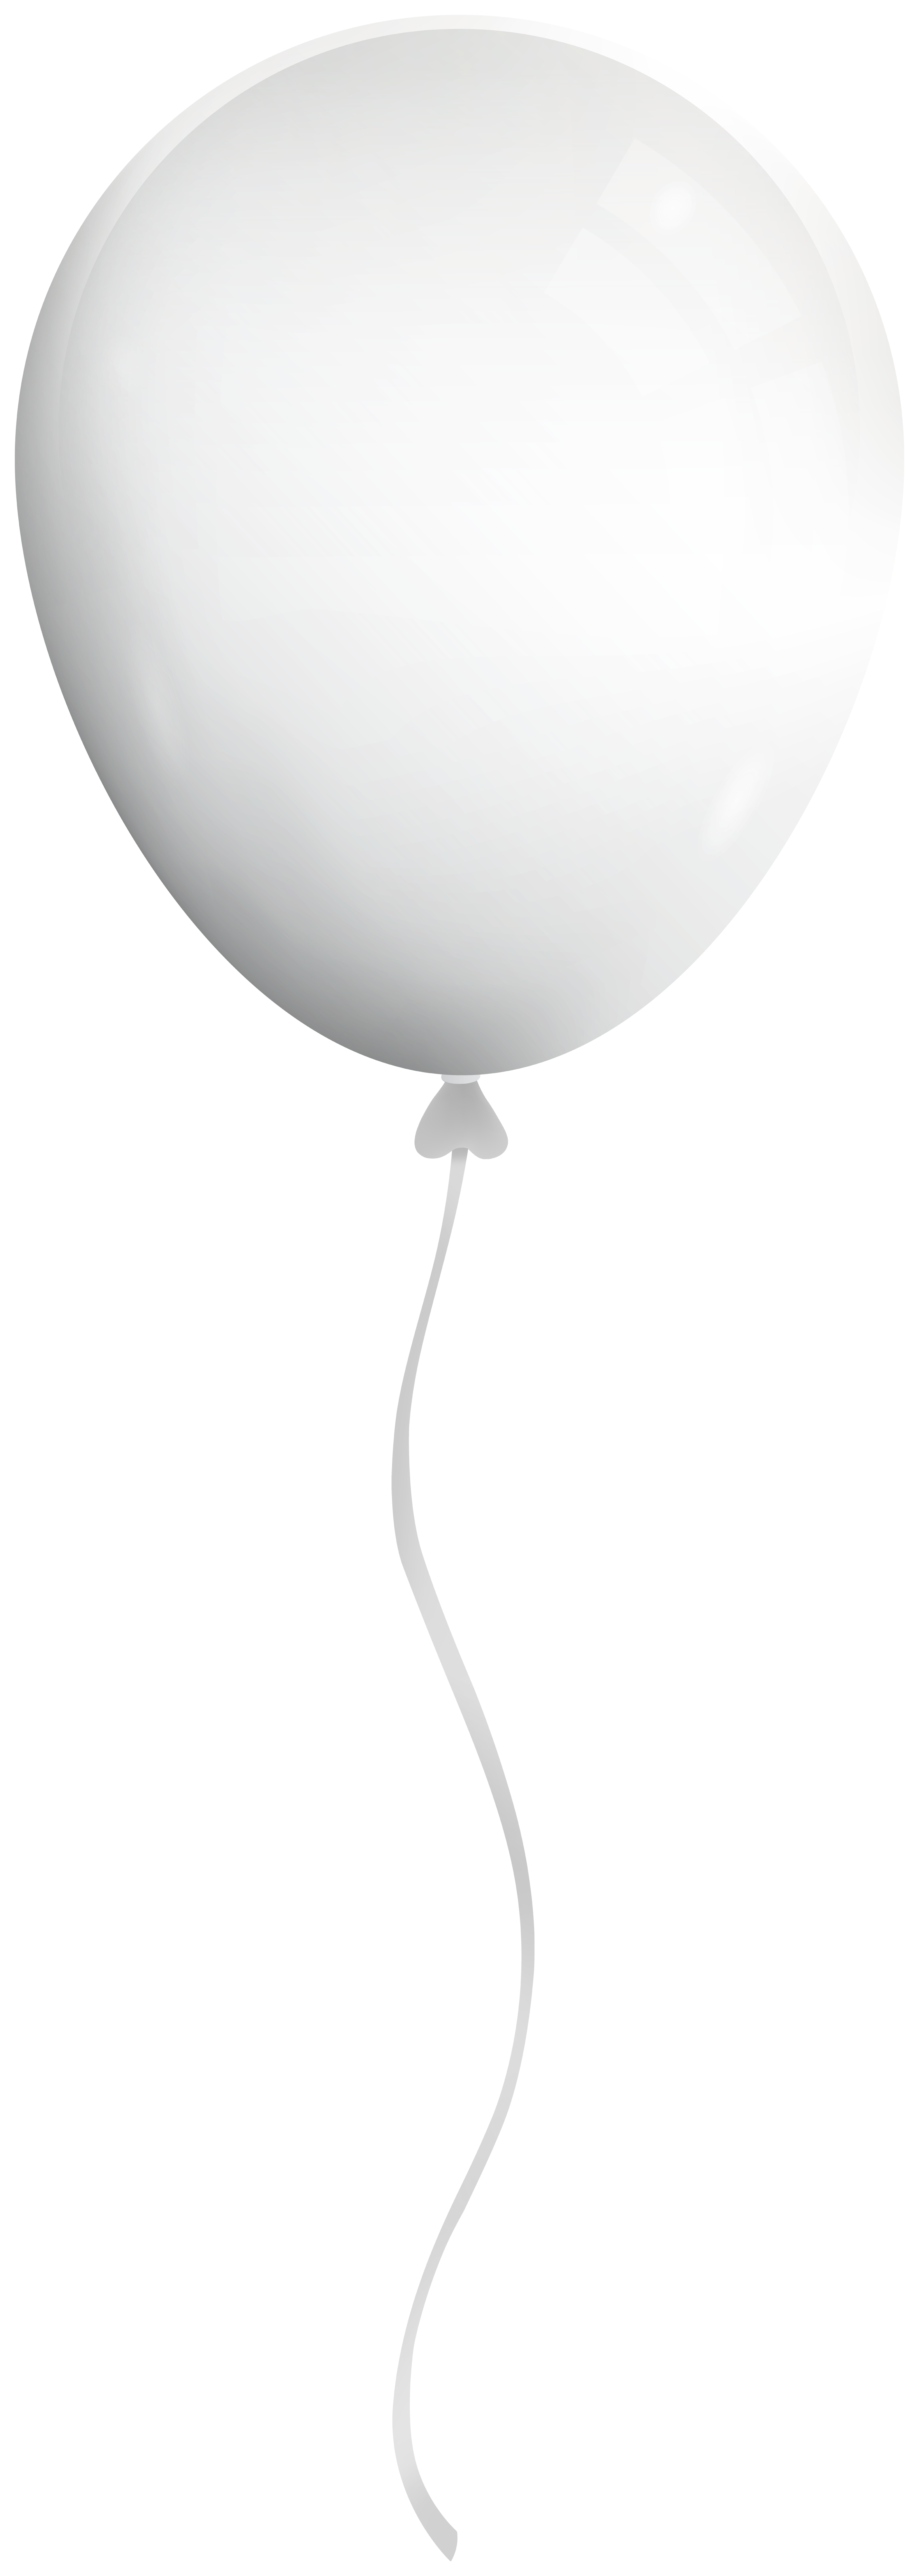 White Single Balloon Clipart​  Gallery Yopriceville - High